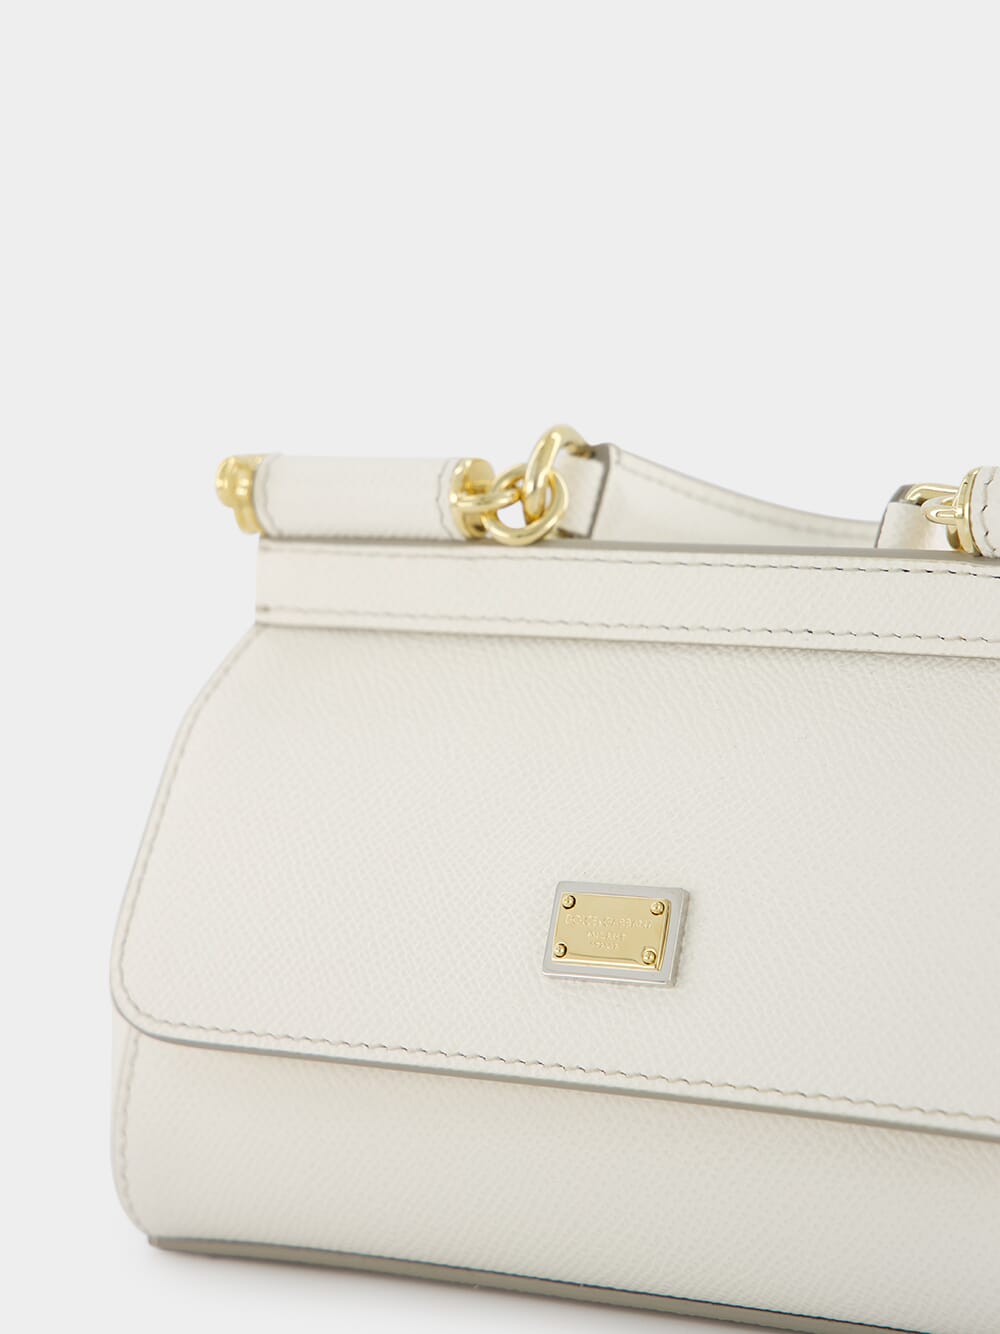 Dolce & GabbanaSmall Sicily Handbag at Fashion Clinic